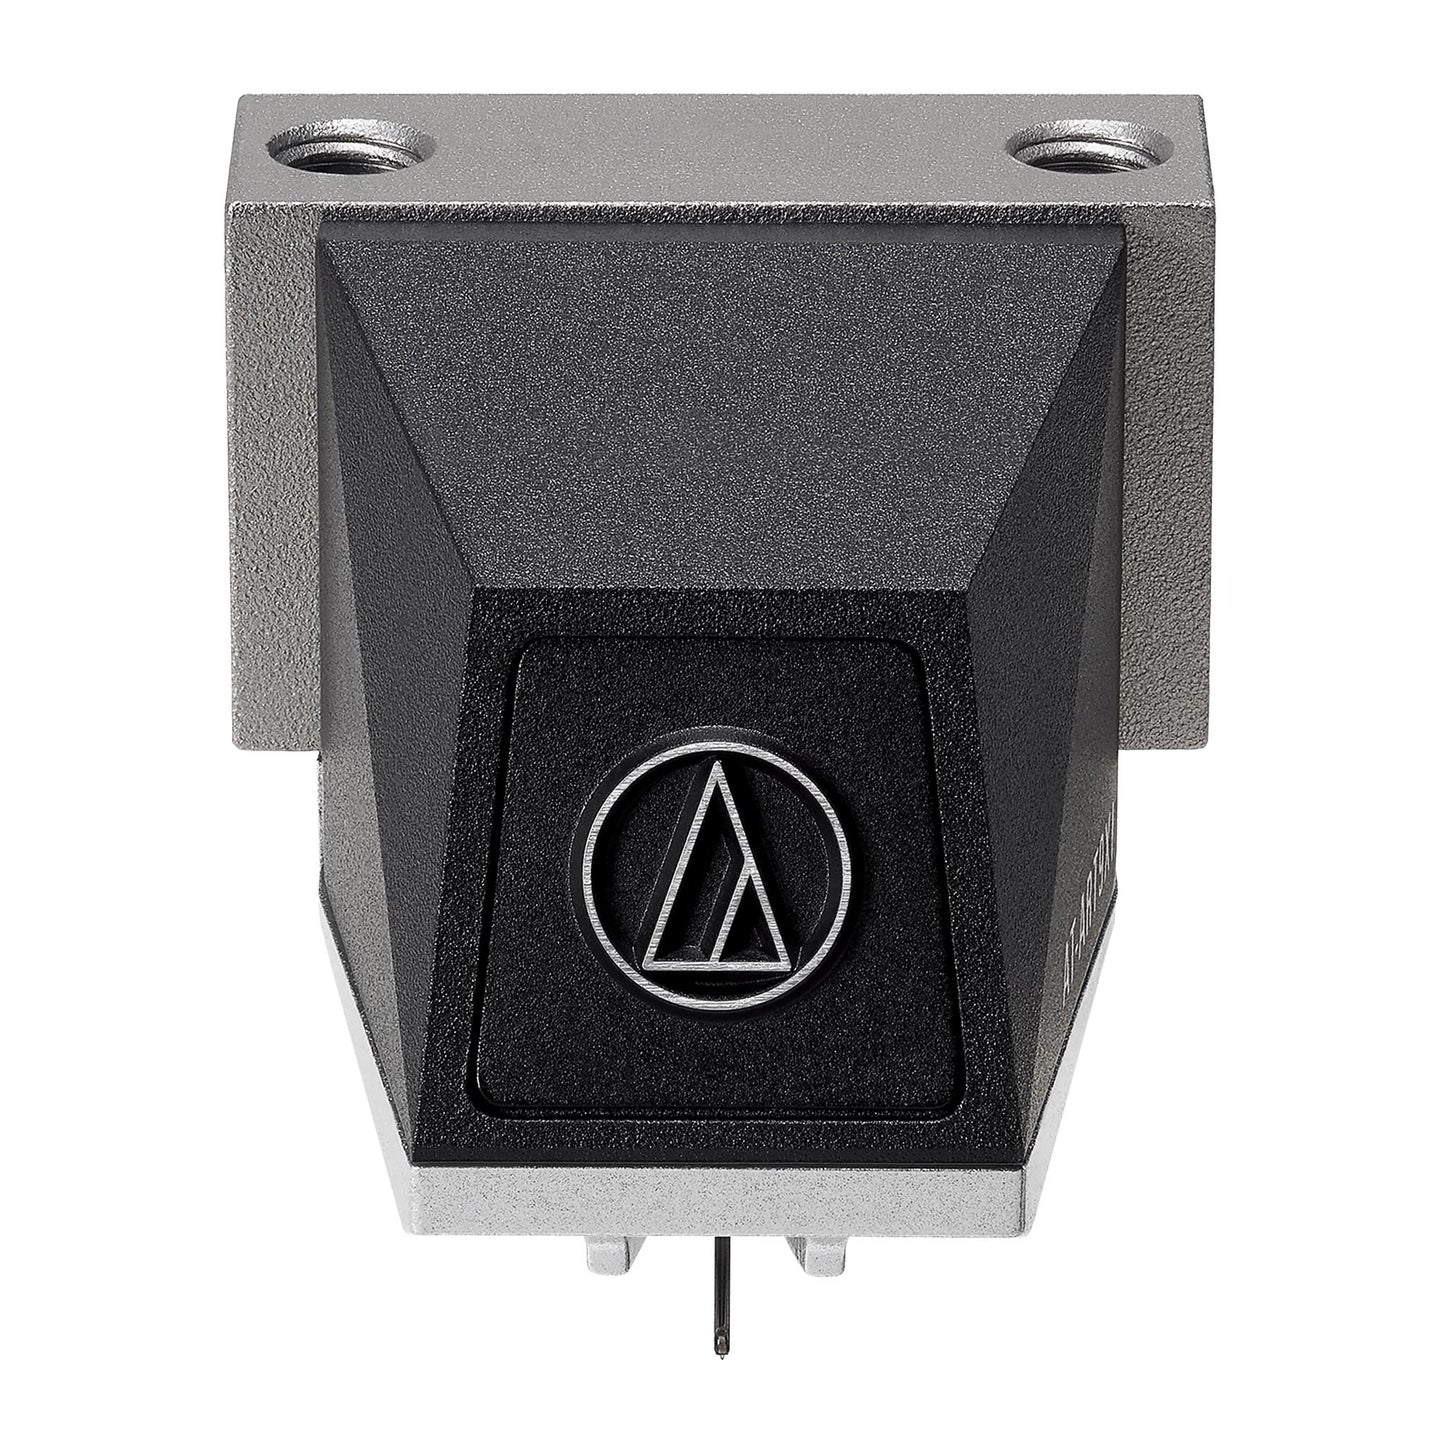 Audio-Technica ART-9xi Moving Coil Cartridge